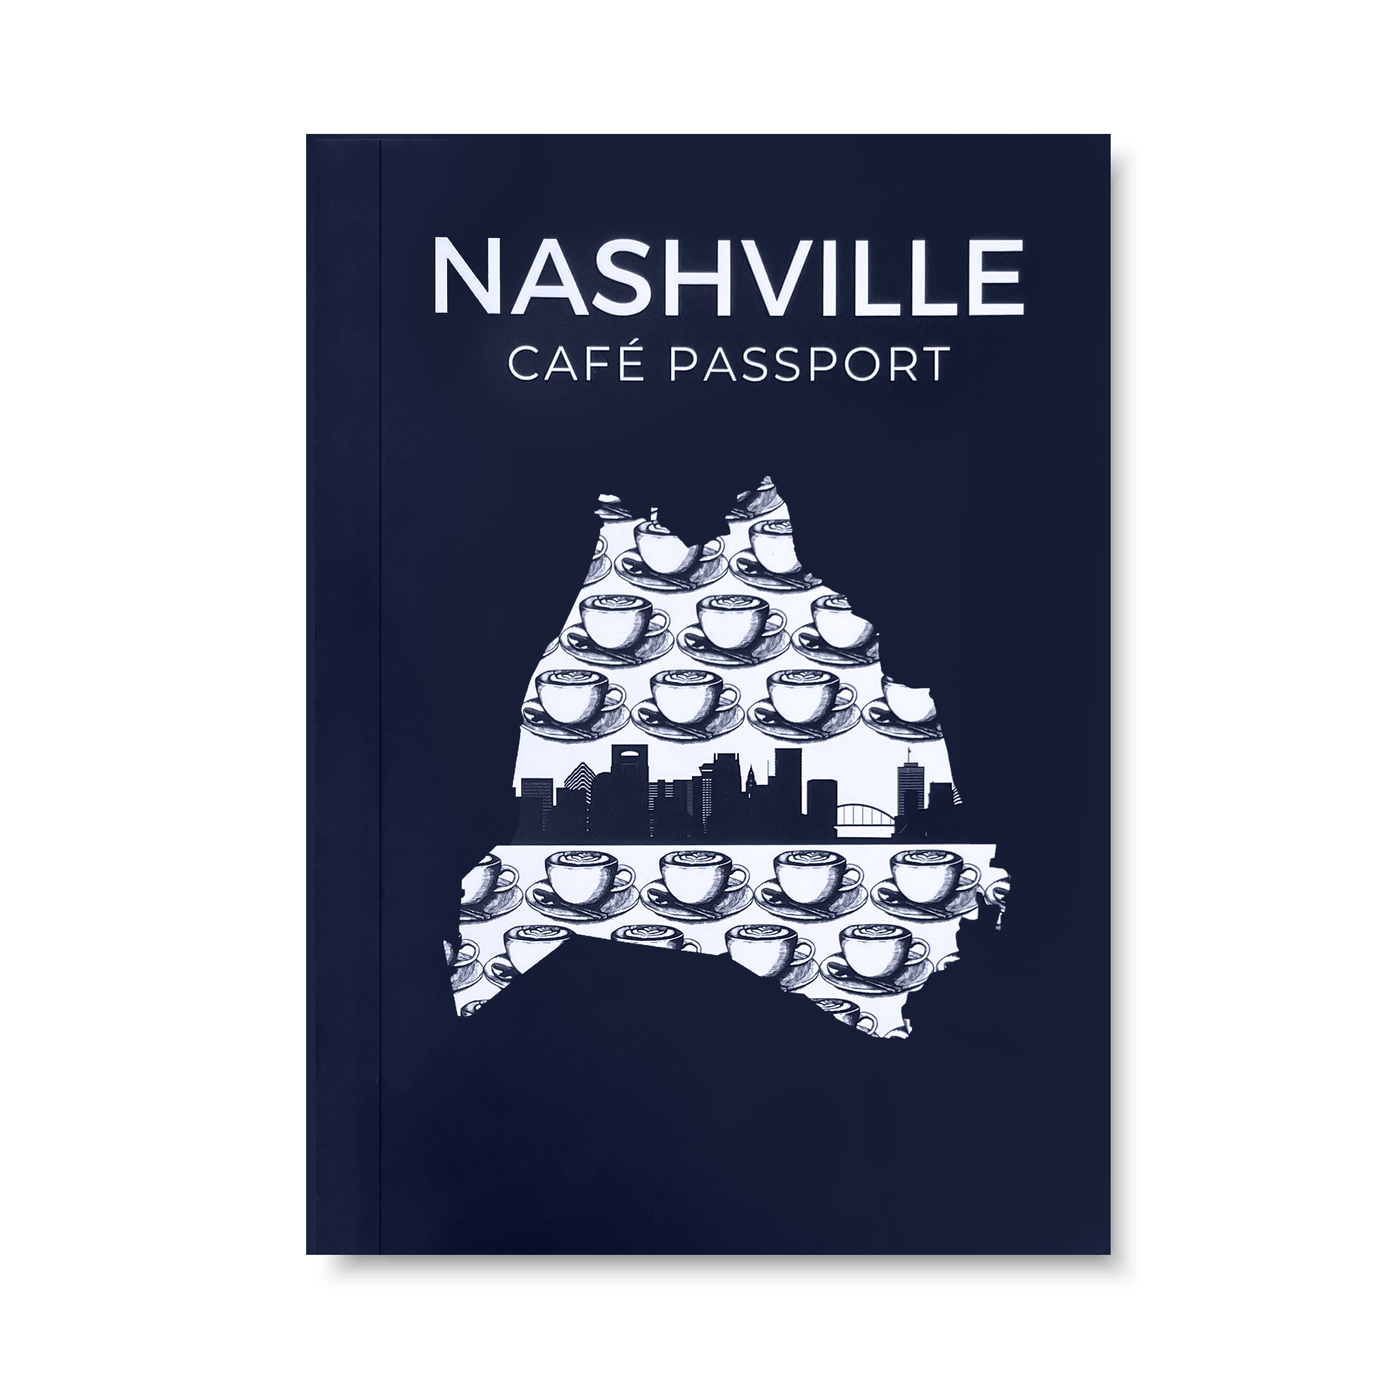 Nashville Cafe Passport Cover